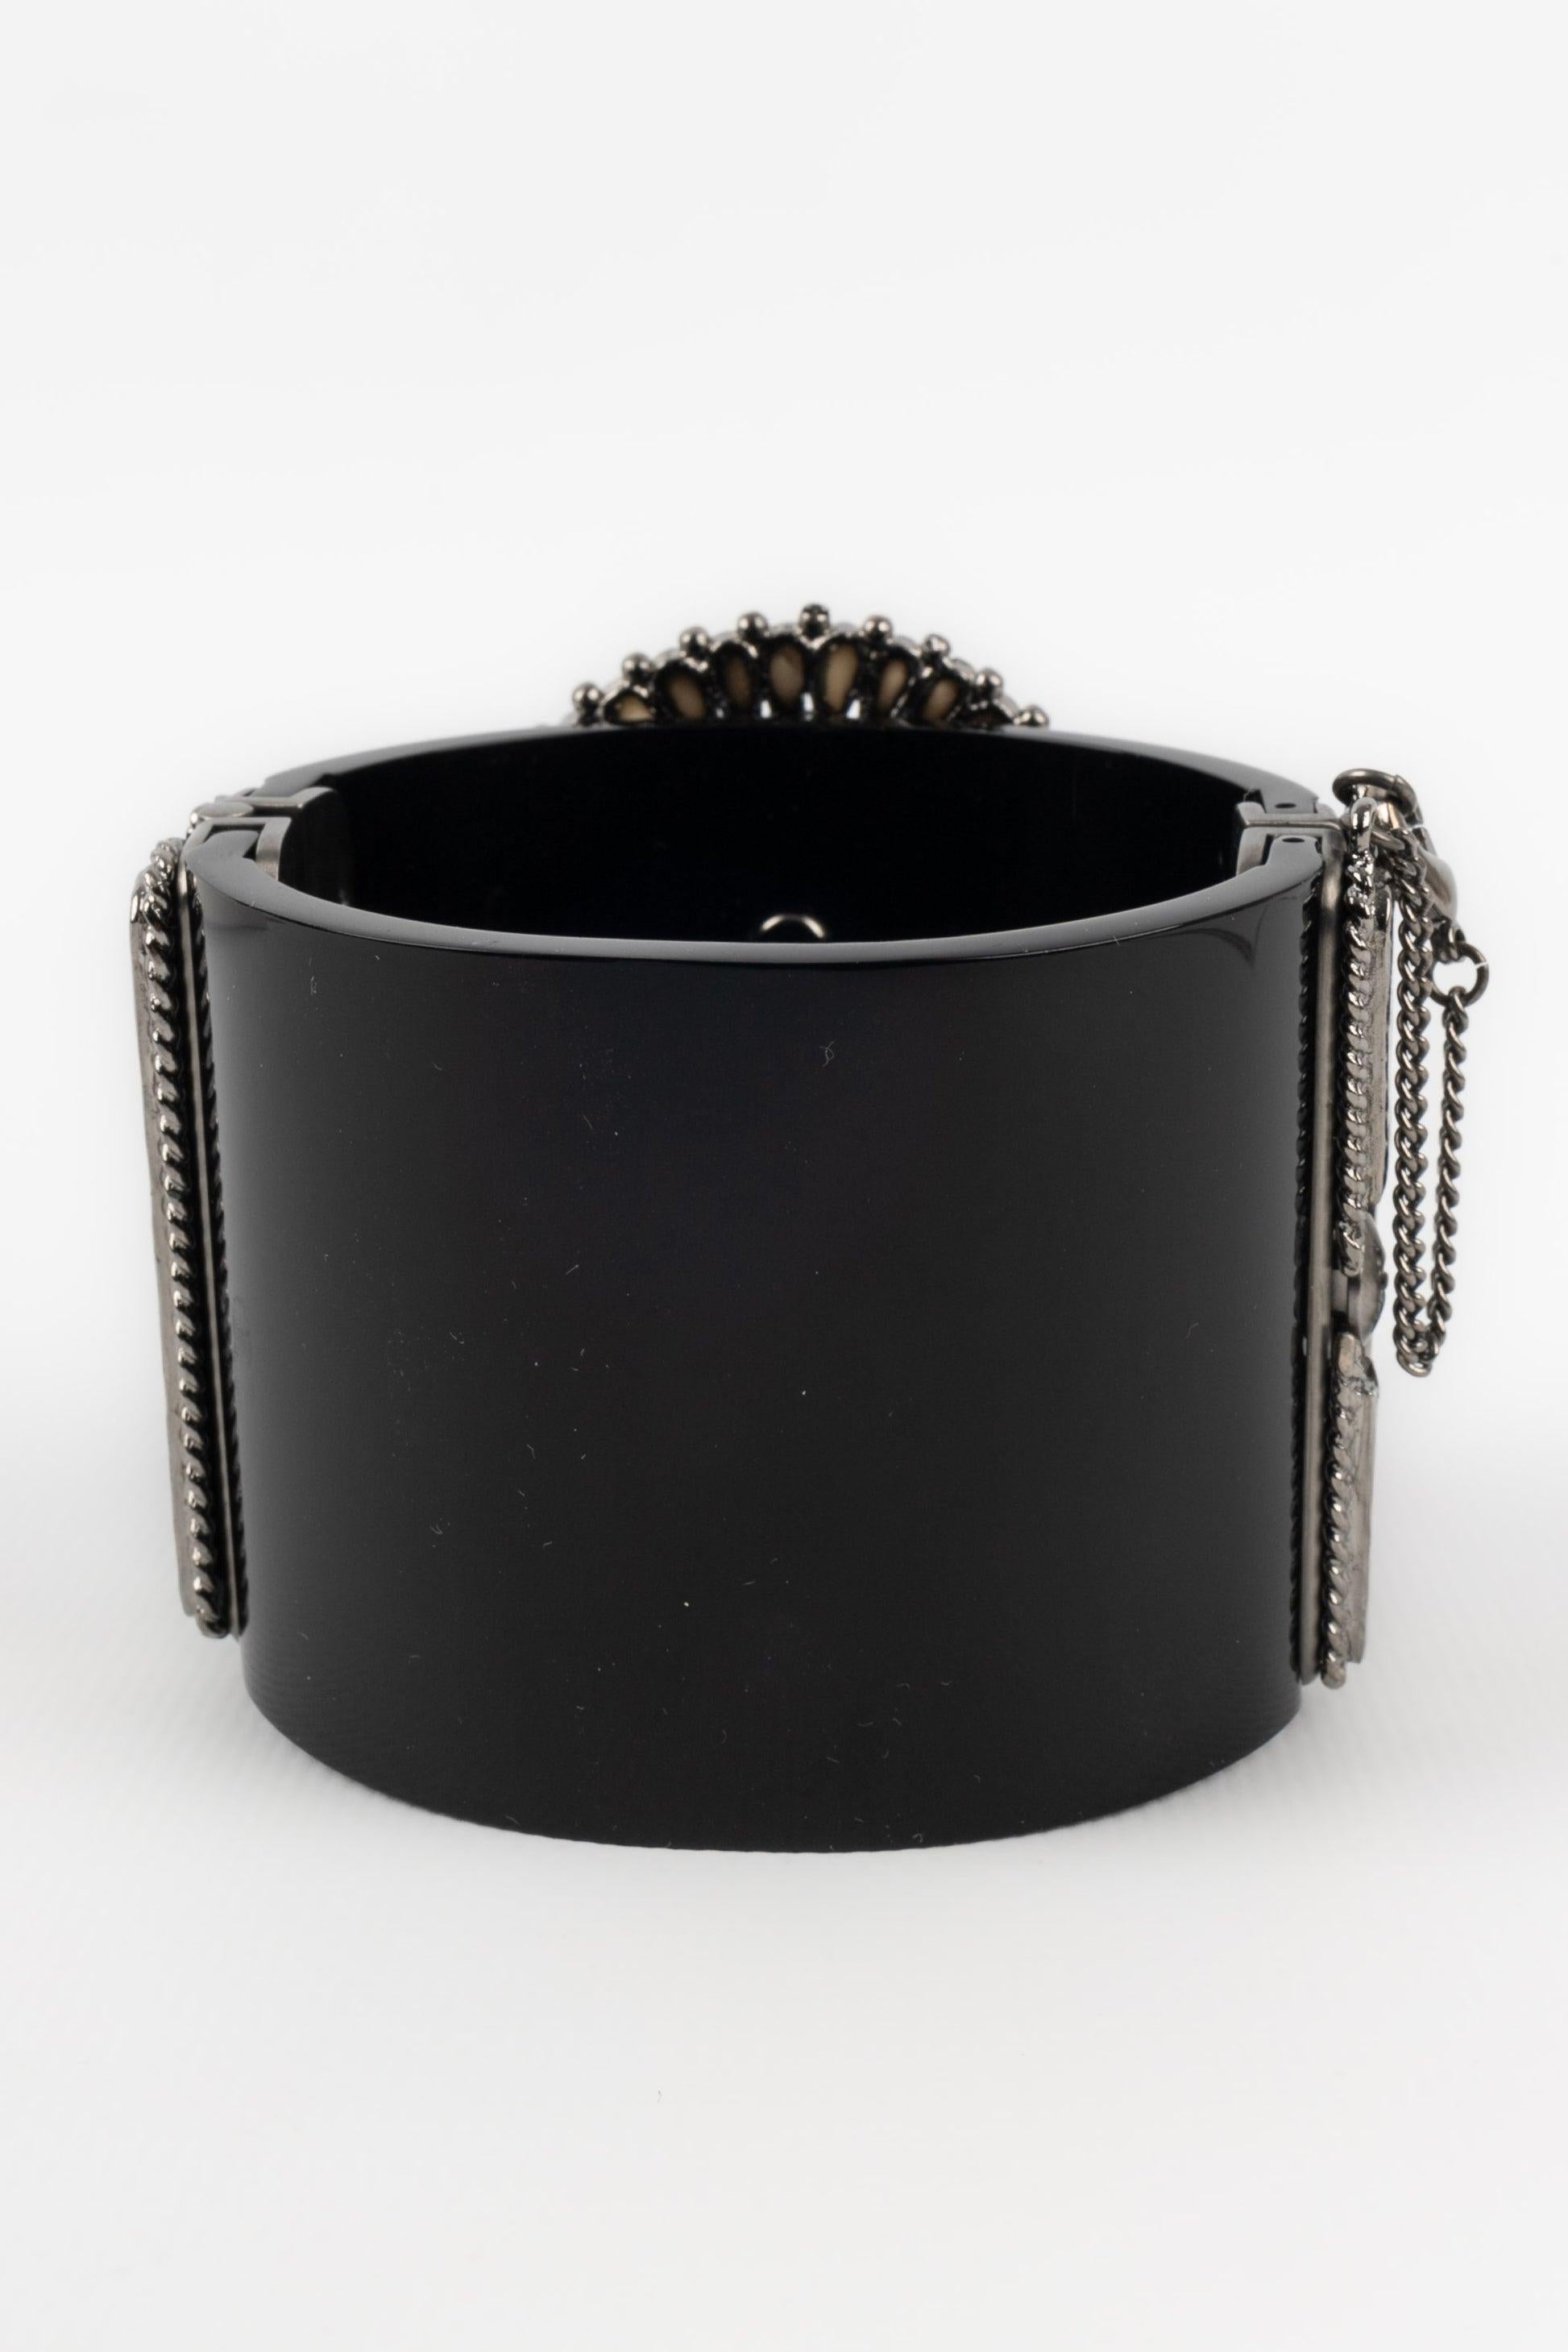 Women's Chanel Cuff Bracelet in Black Bakelite, Silvery Metal, and Resin For Sale